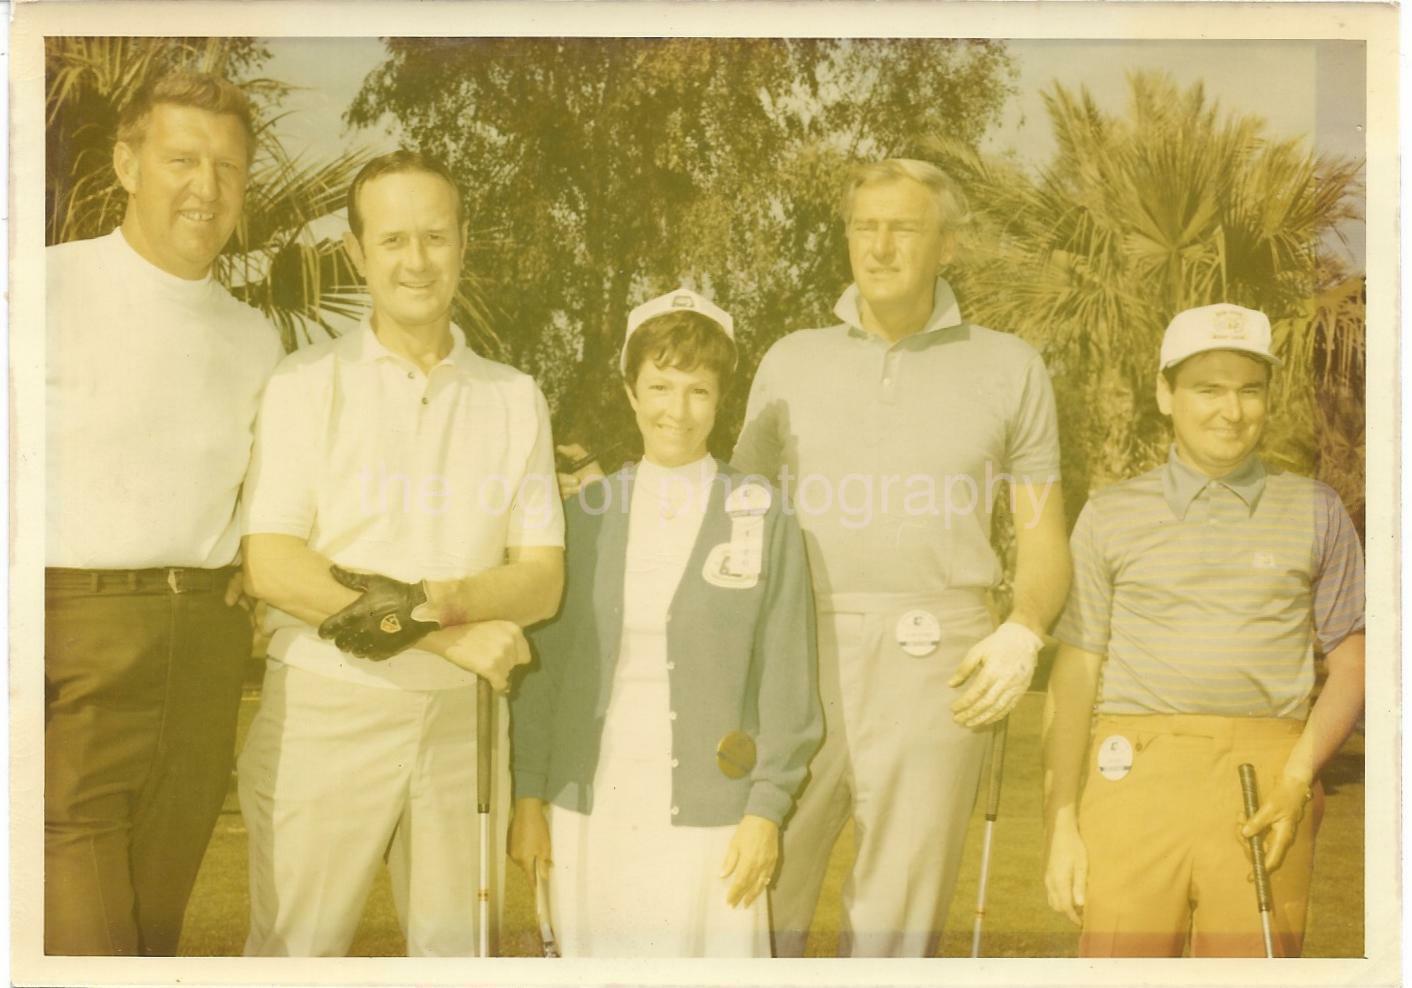 Golf Portrait 5 x 7 FOUND PHOTOGRAPH Color BOB HOPE DESERT CLASSIC 1970 111 15 F